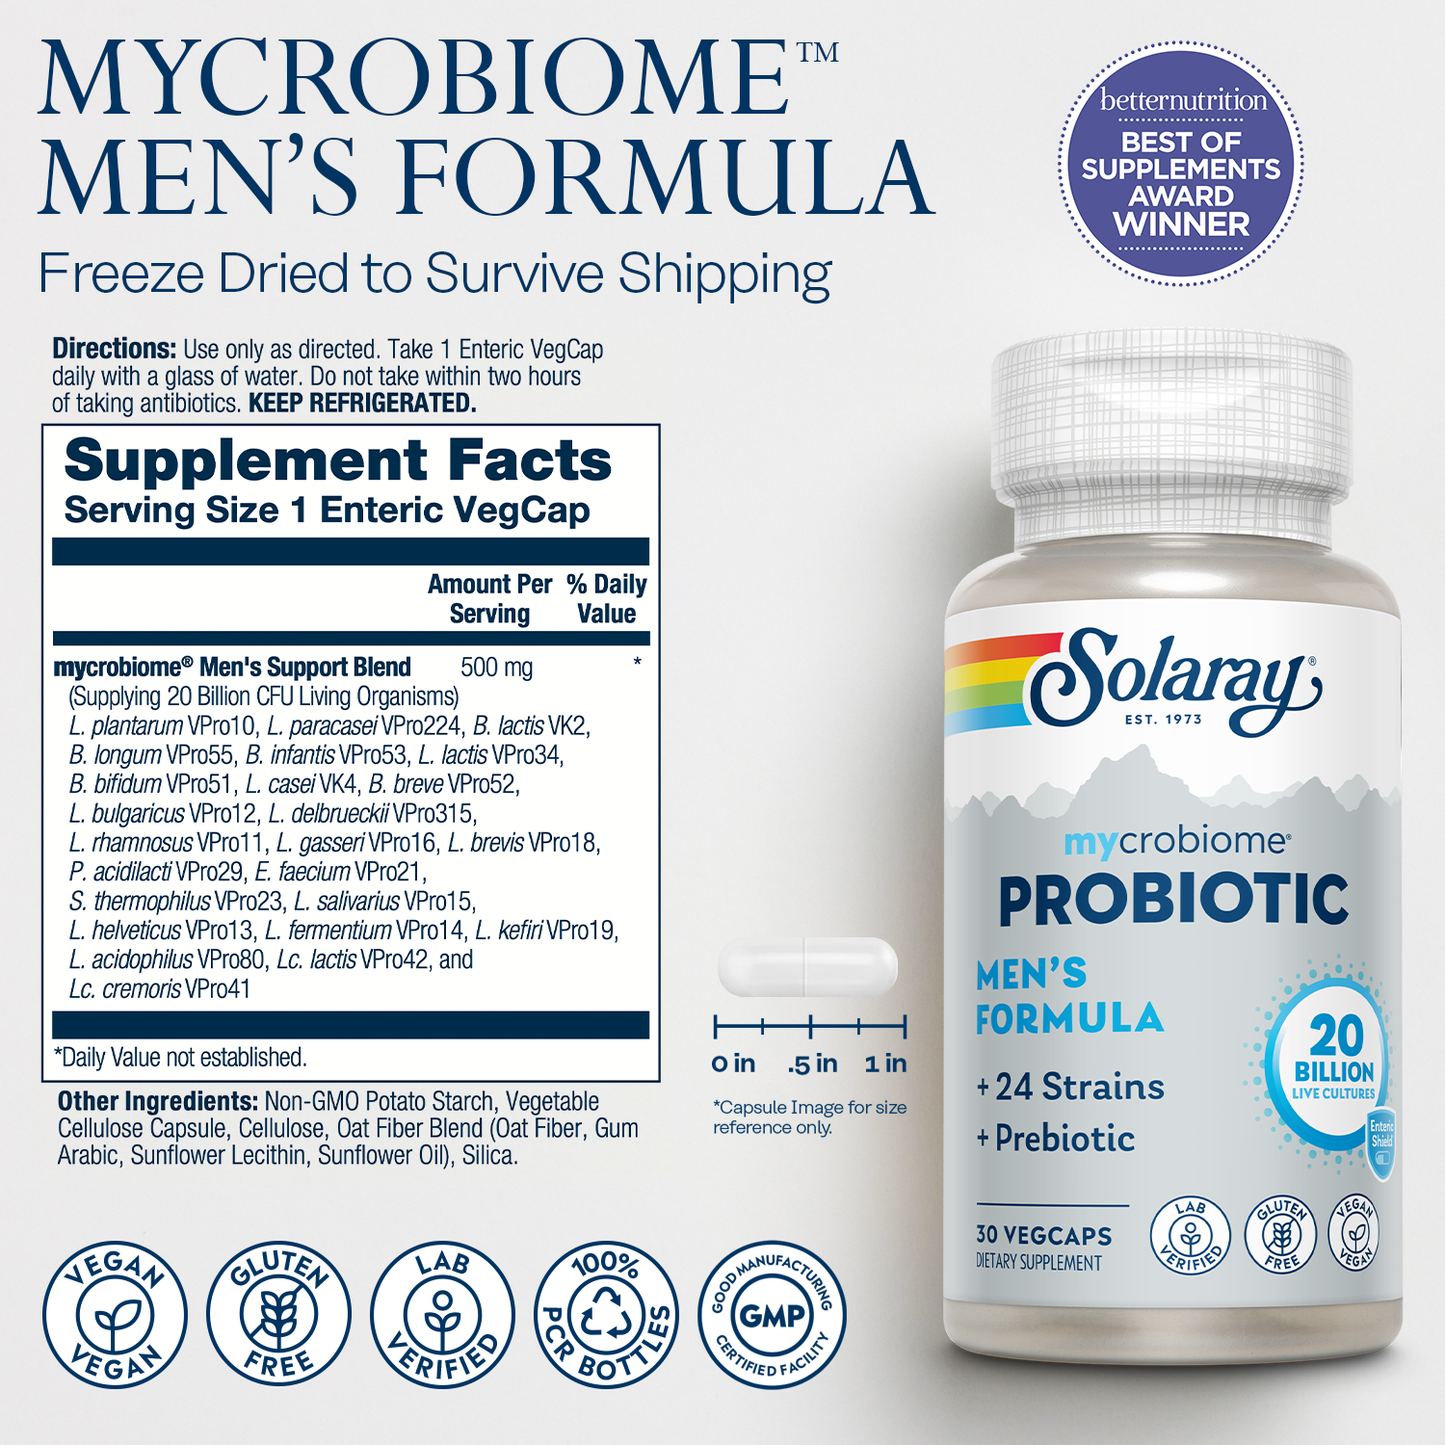 Mycrobiome Probiotic Men's Formula, 20 Billion, 24 Strain Once Daily